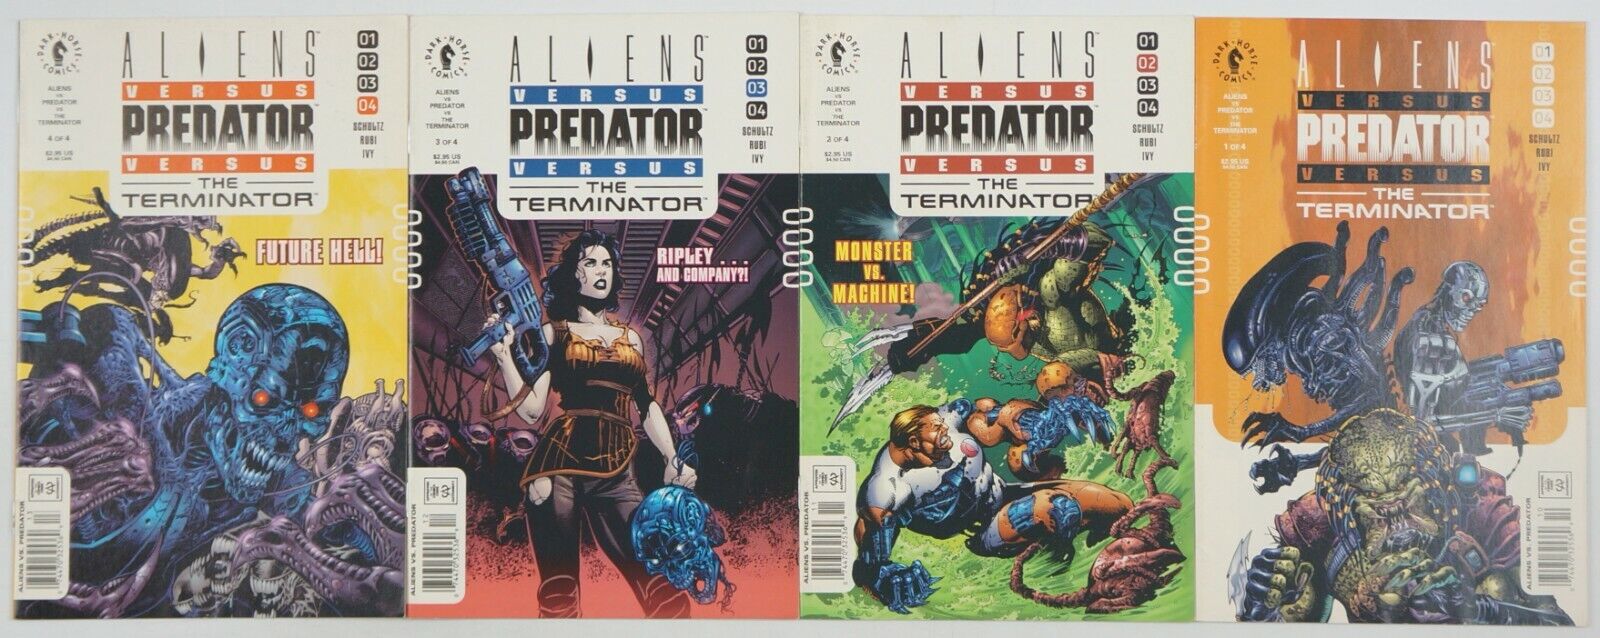 Aliens versus Predator vs Terminator #1-4 VF/NM complete series - all newsstand